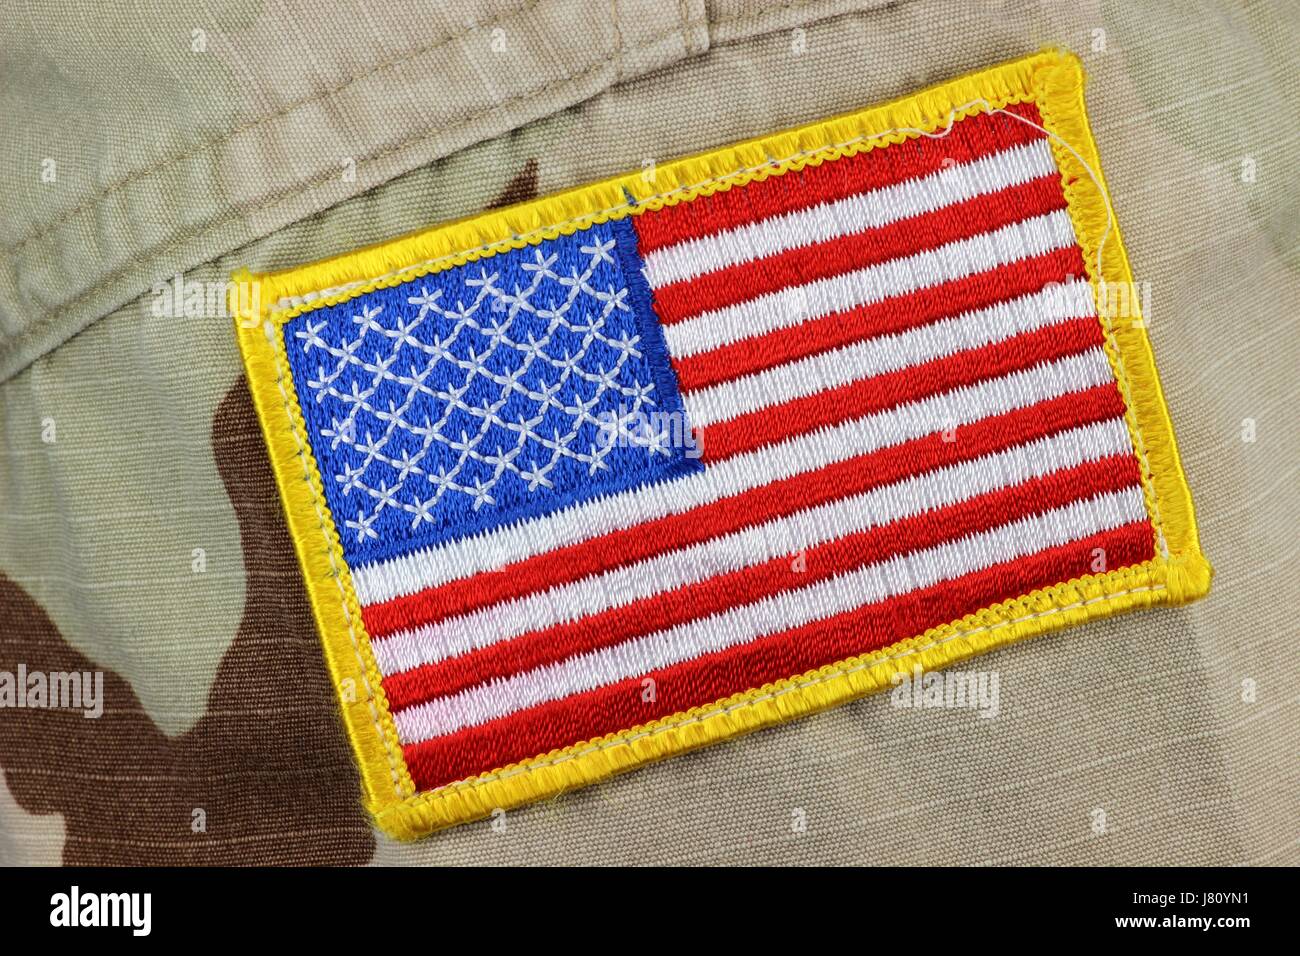 U.S. flag patch on desert uniform Stock Photo